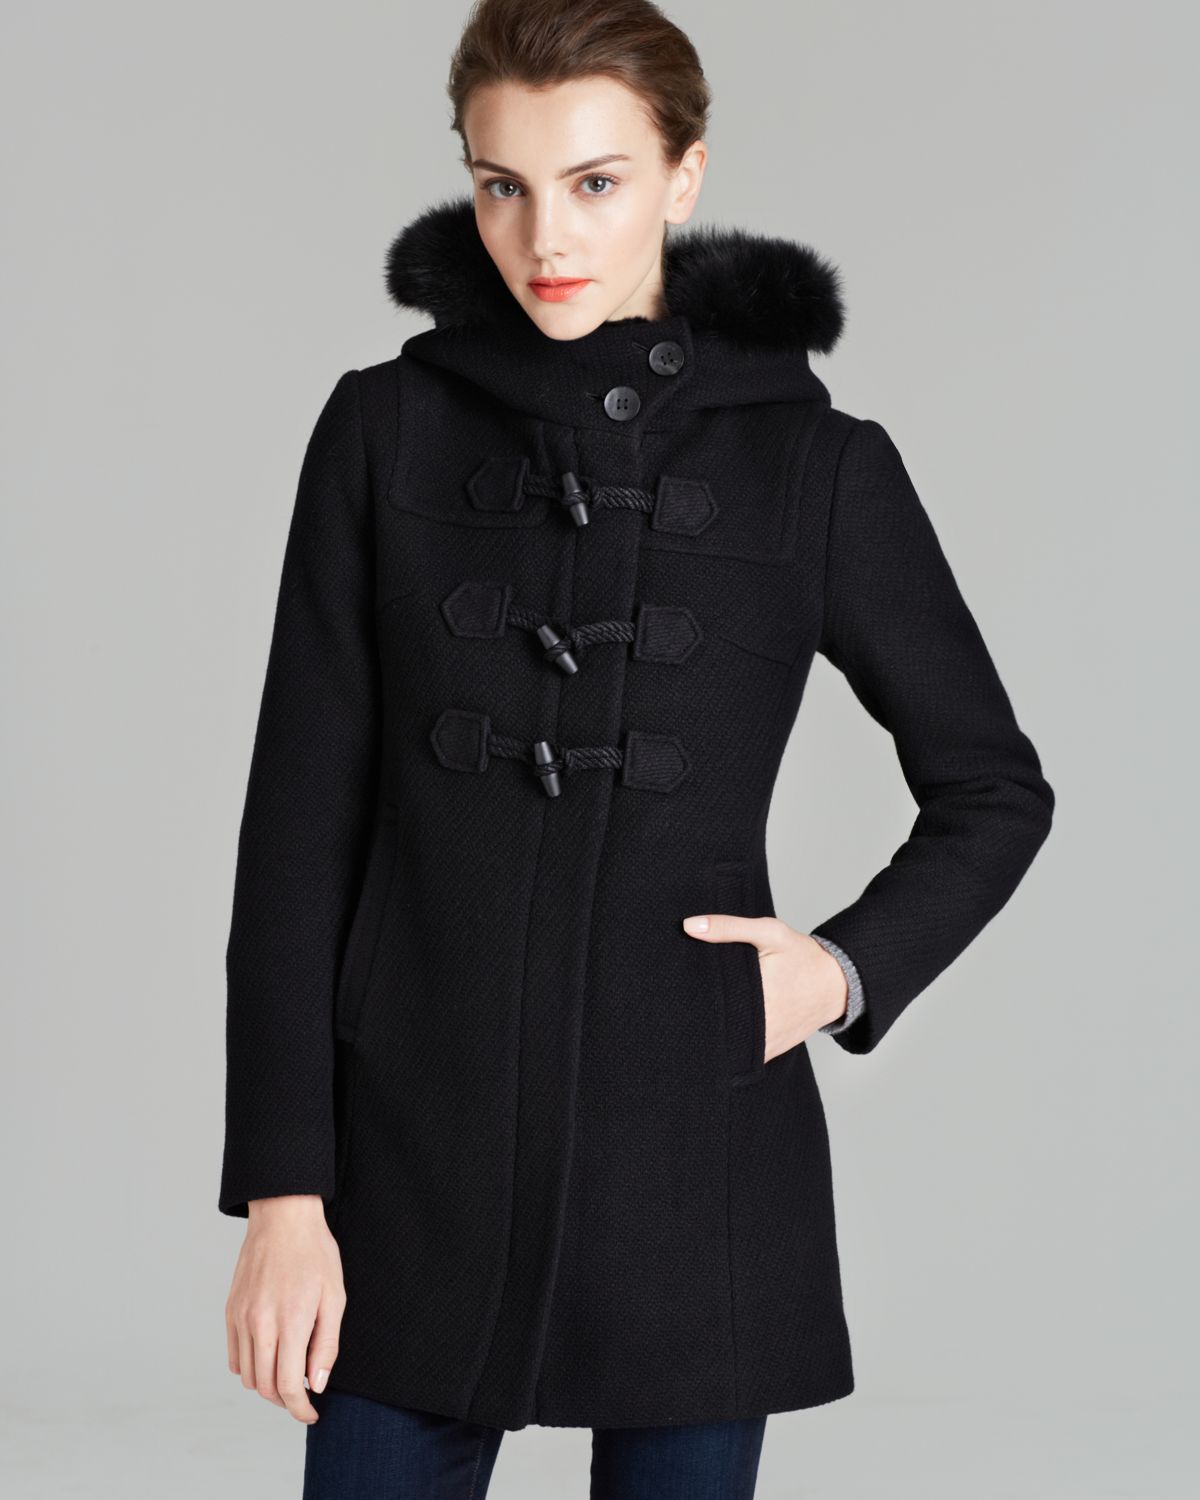 Lyst - Andrew Marc Coat Toggle Front Fur Trim in Black